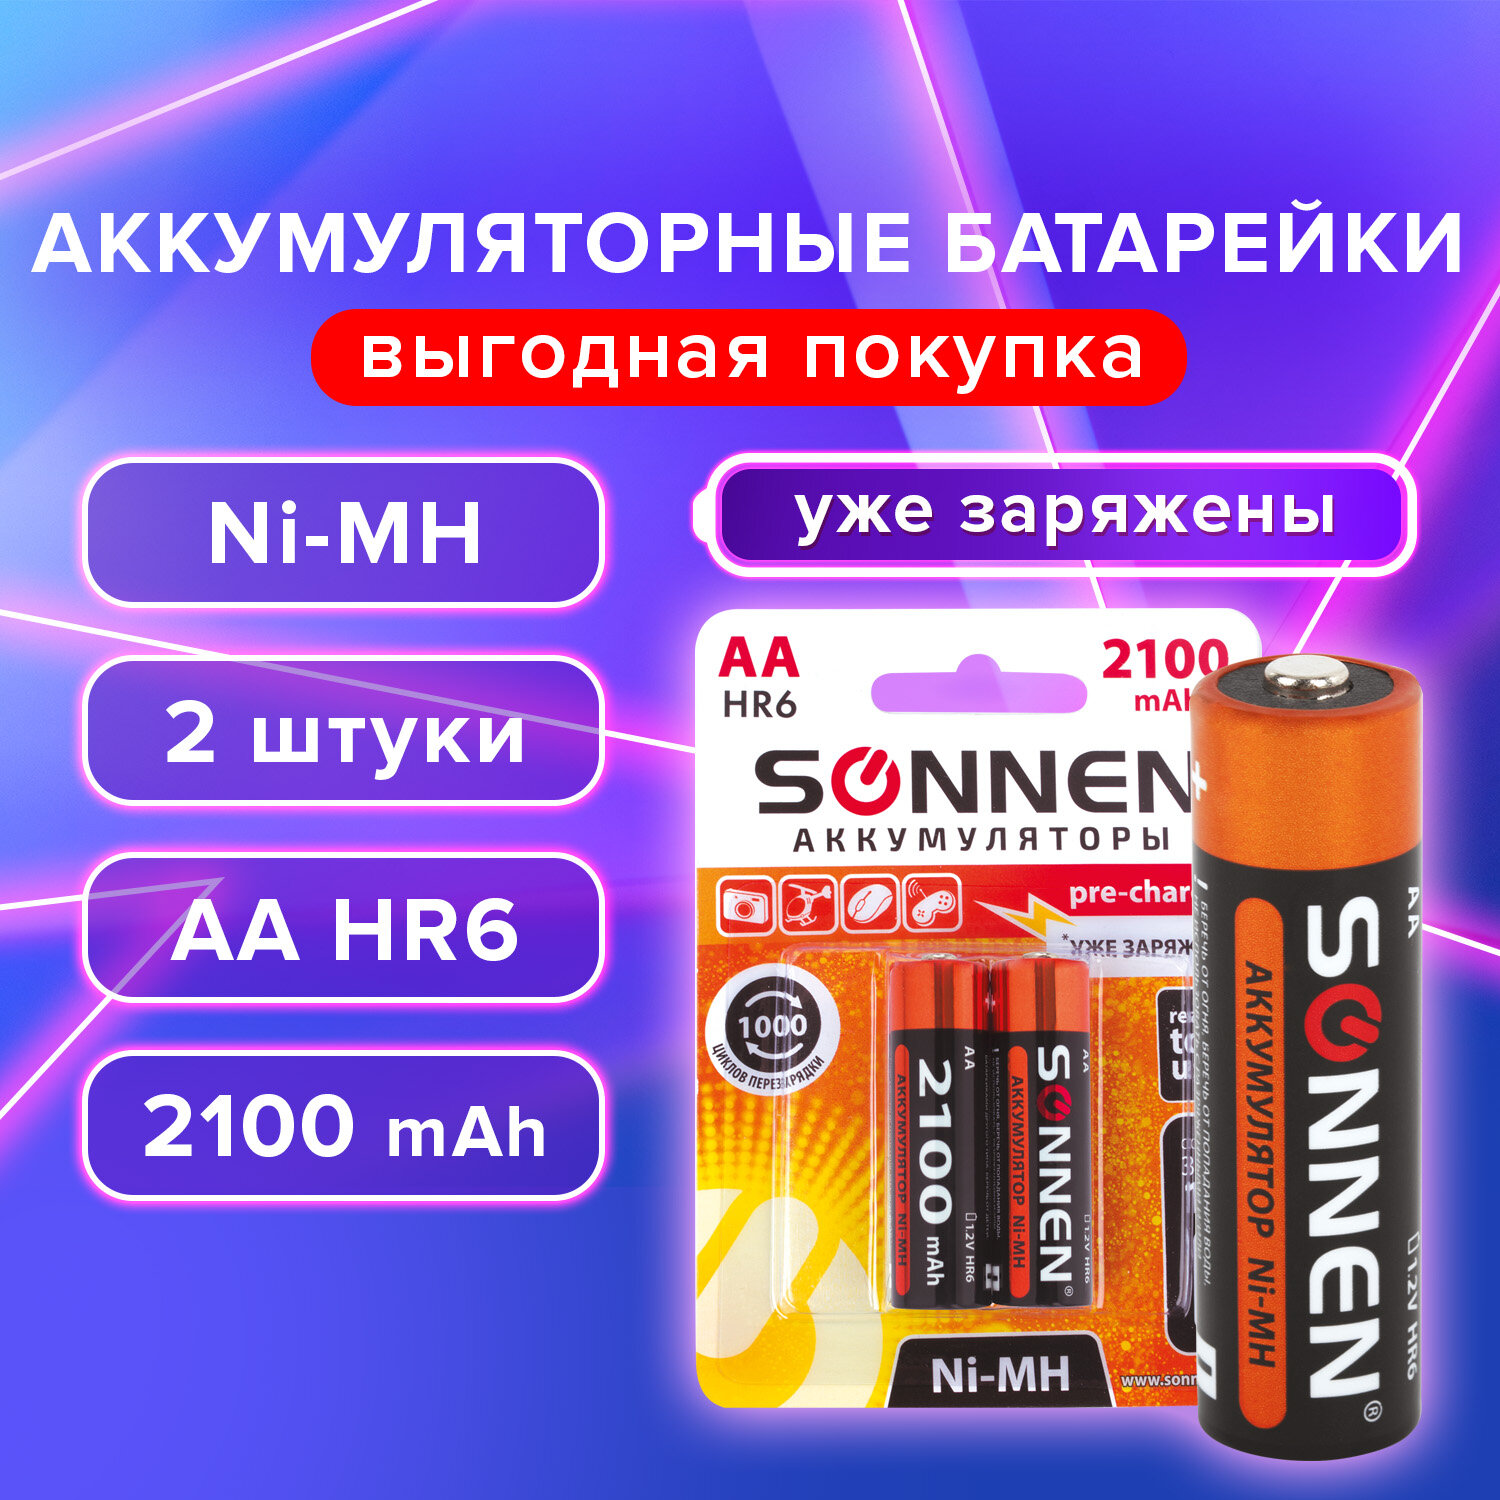 Sonnen Батарейки аккумуляторные 2 шт. SONNEN 454234, АА (HR6), Ni-Mh, 2100 mAh, в блистере, комплект 2 уп.